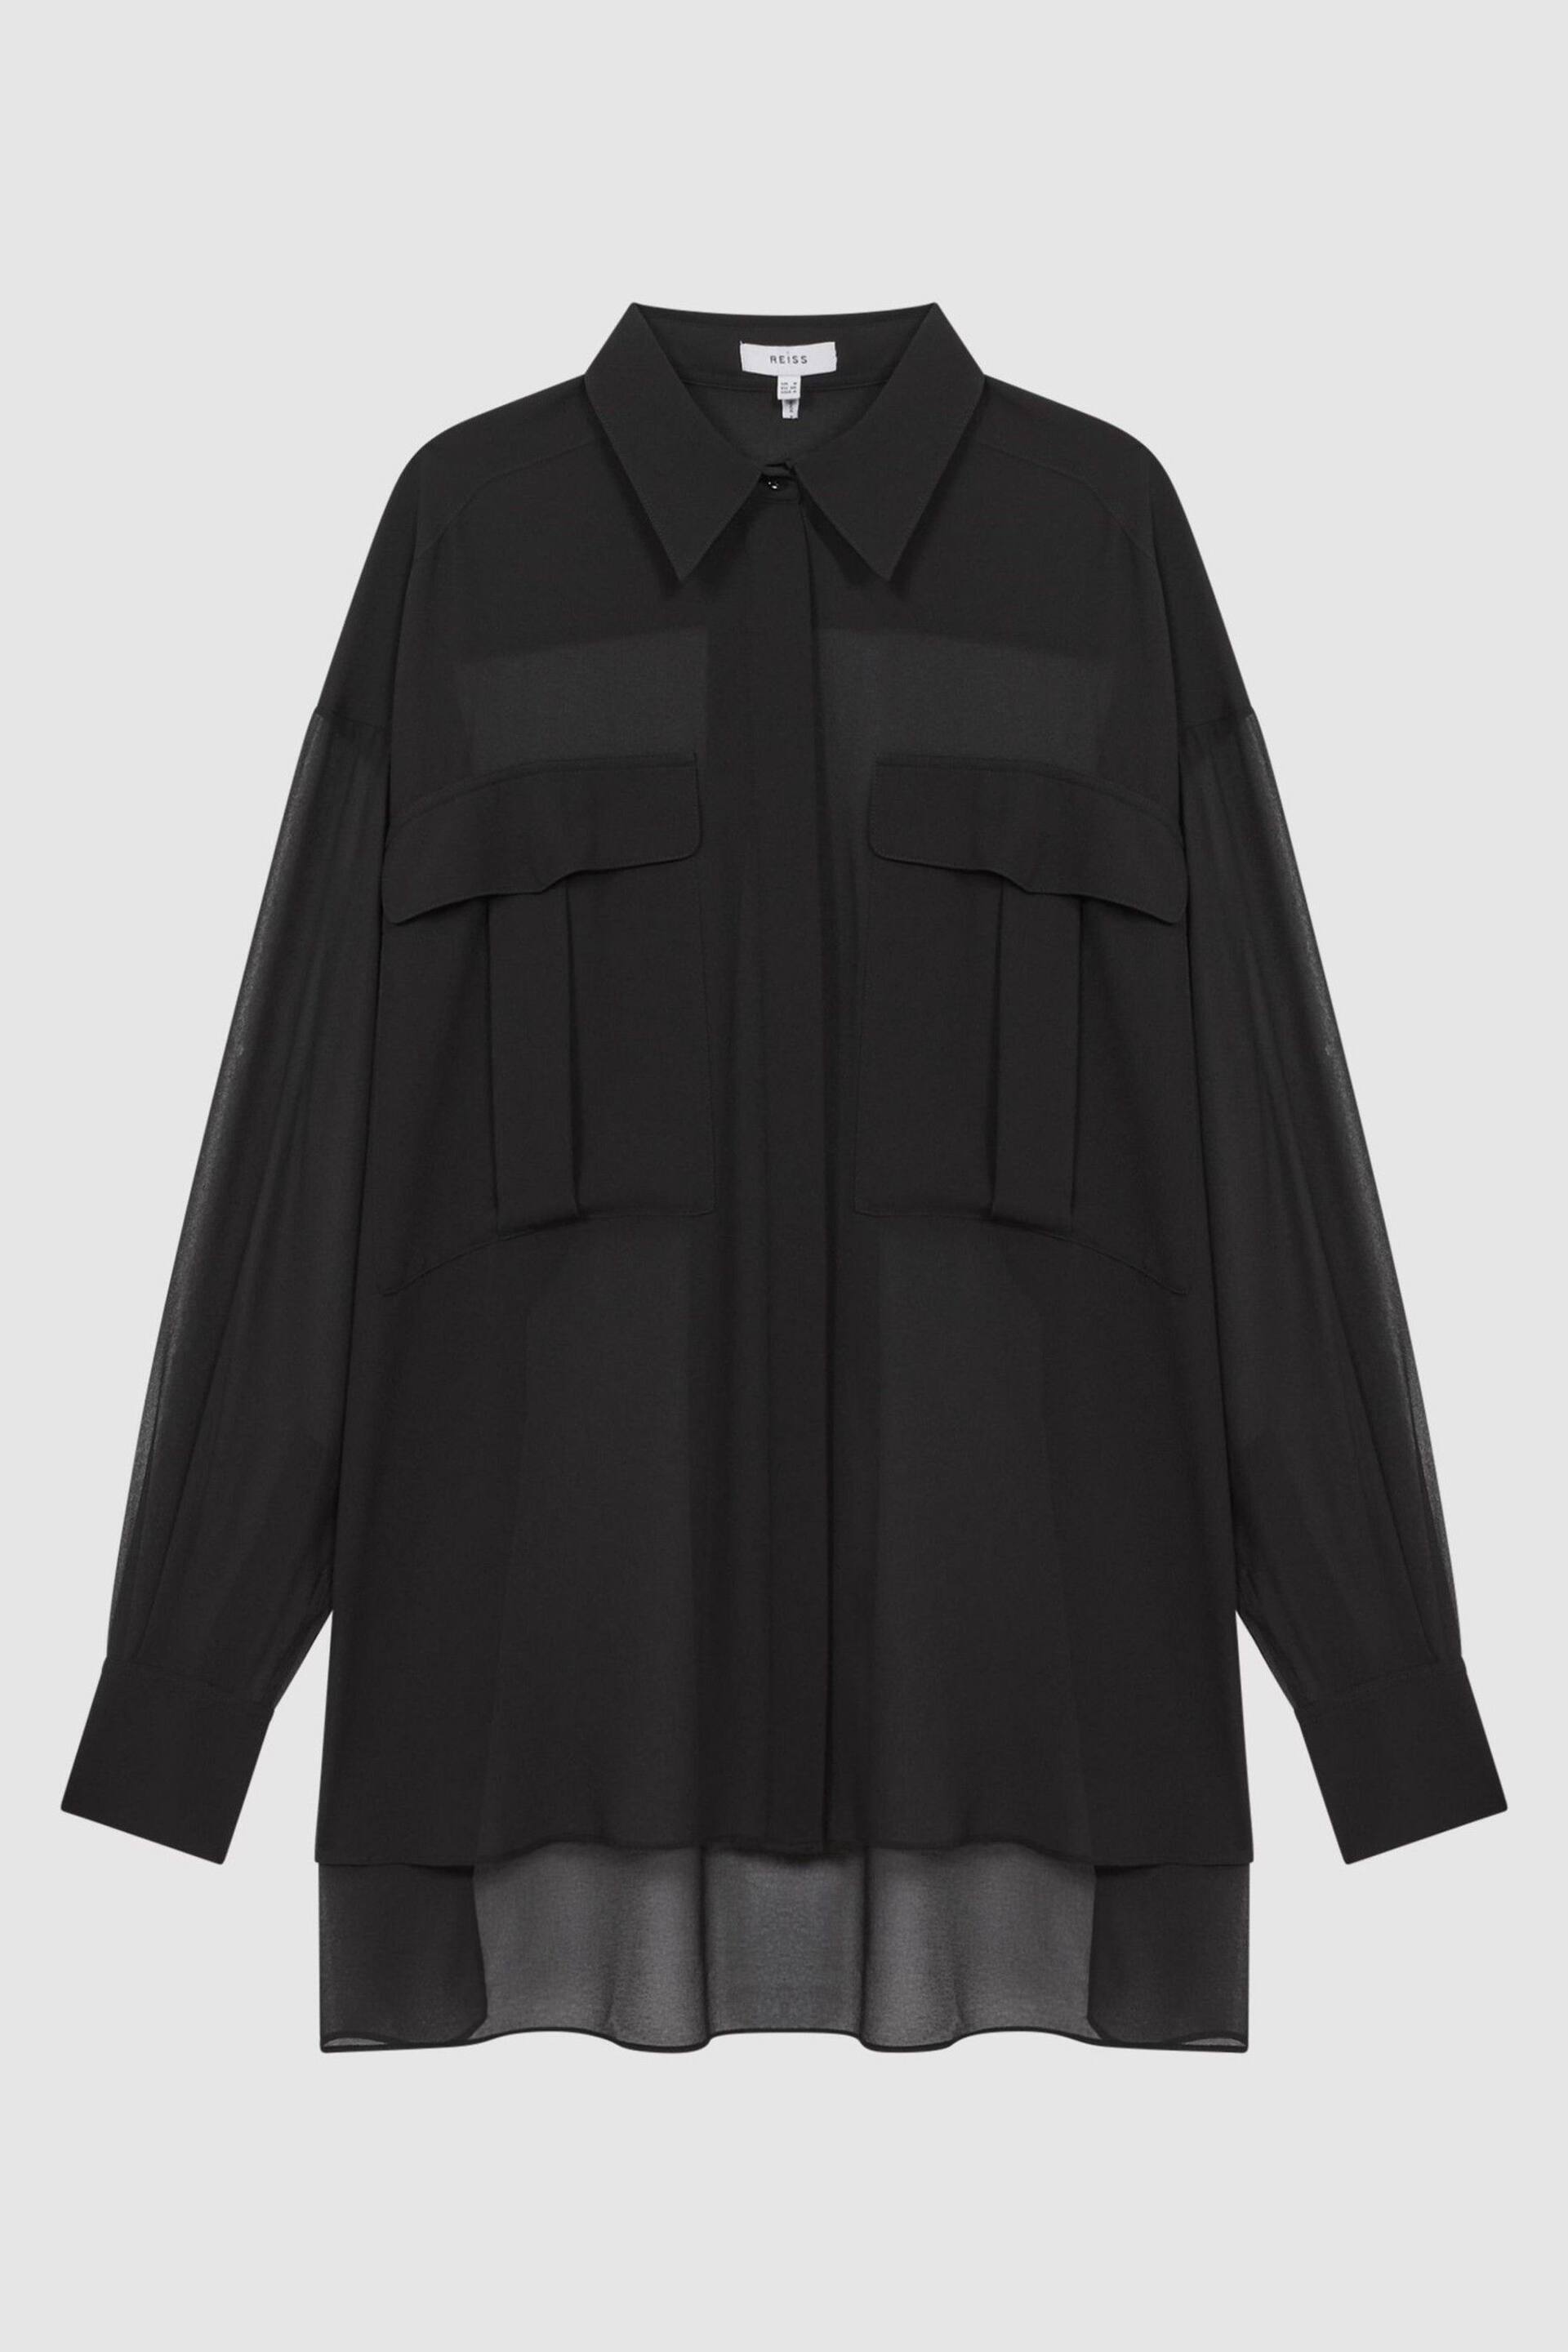 Reiss Black Adaline Oversized Sheer Button-Through Shirt - Image 2 of 5